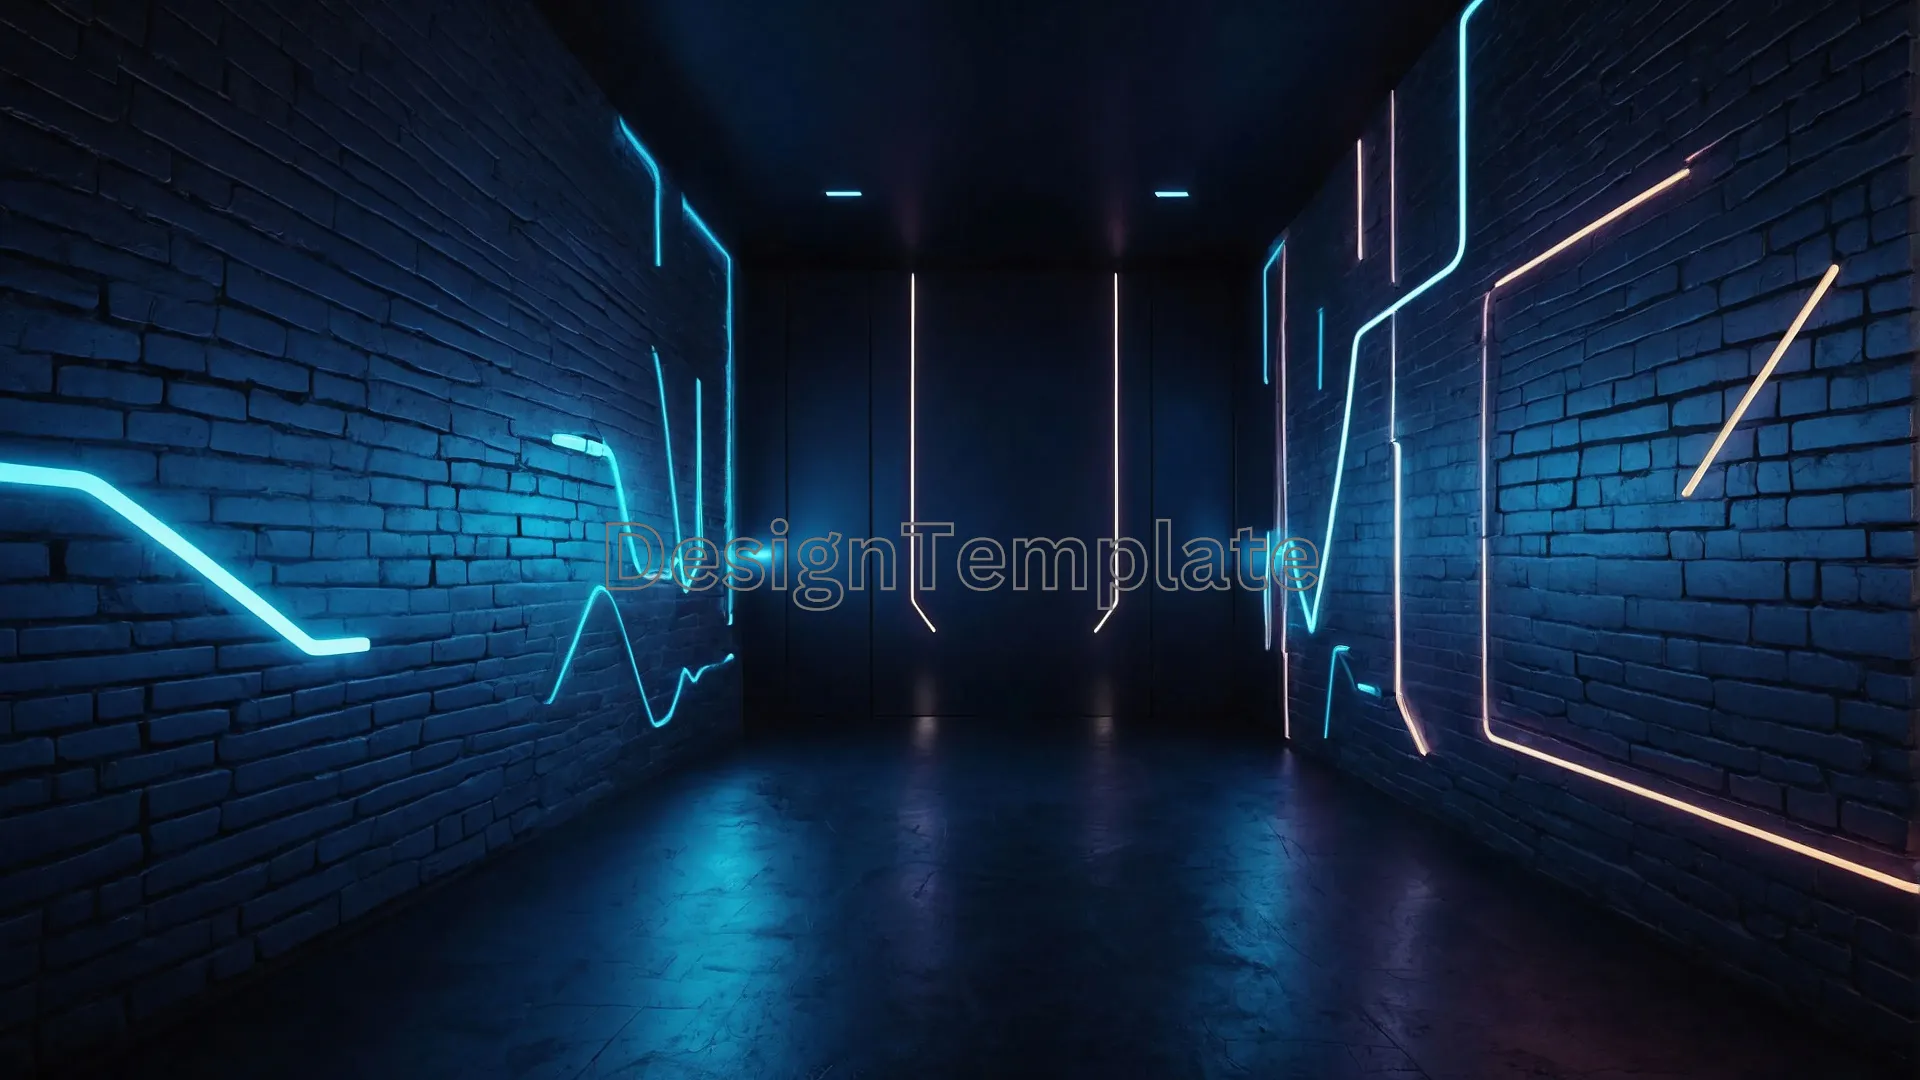 Neon Lights in Black Passage Background Photo image